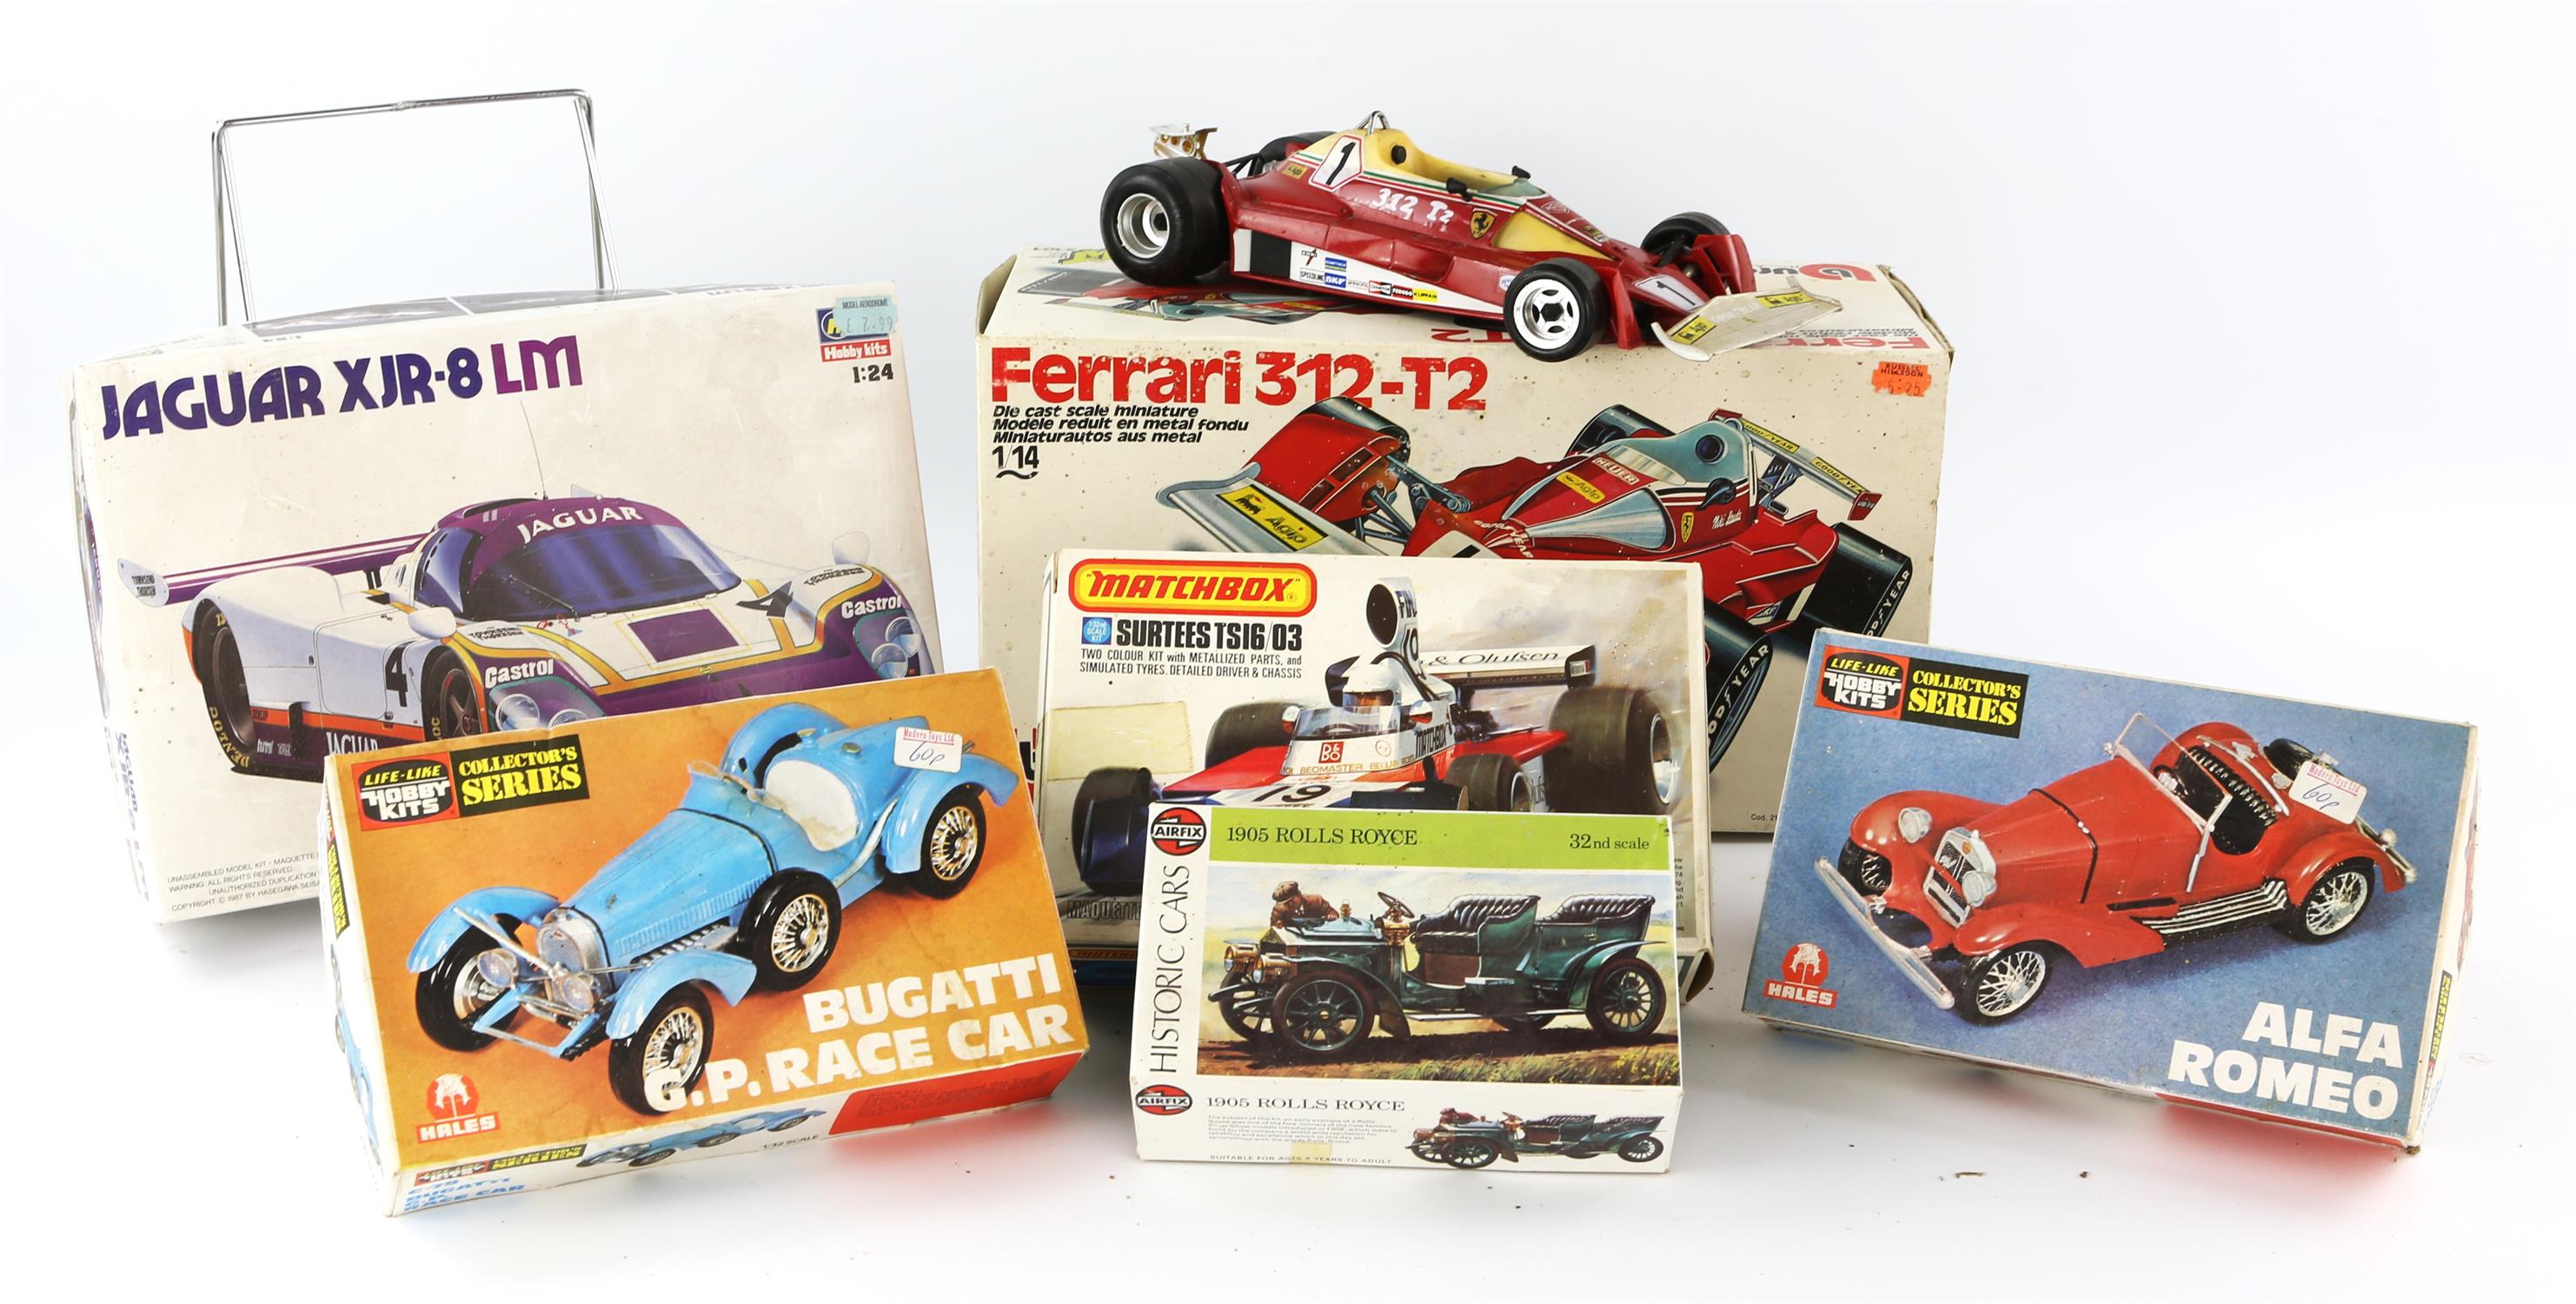 Collection of 7 car models kits - To include Burago Ferrari 312-T2 (1:14), Jaguar XJR-8 LM (1:24),